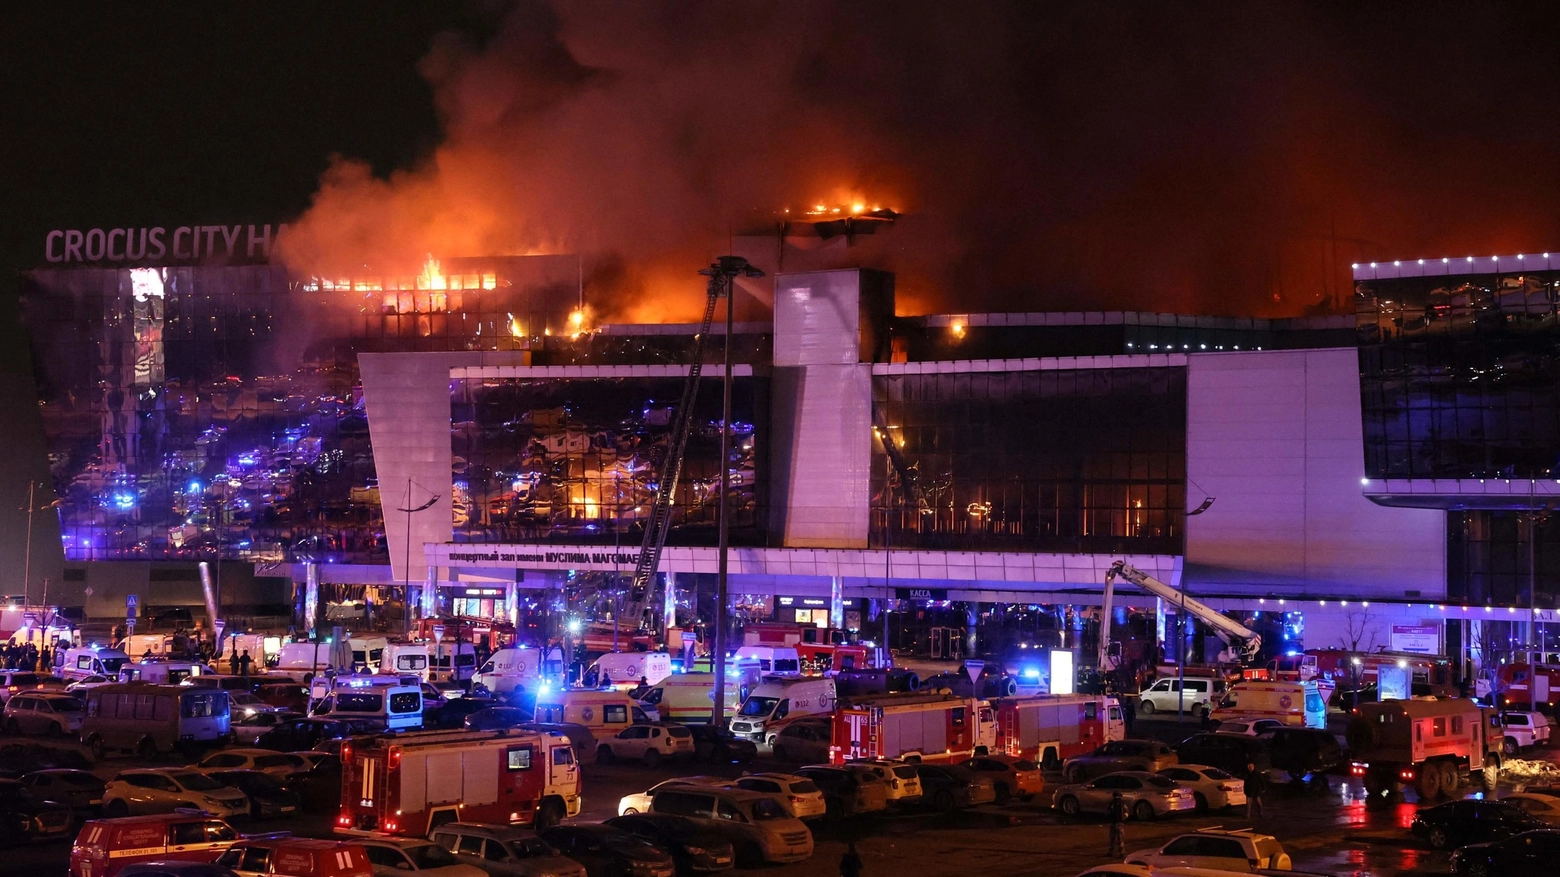 Il Crocus City Hall in fiamme (Ansa)